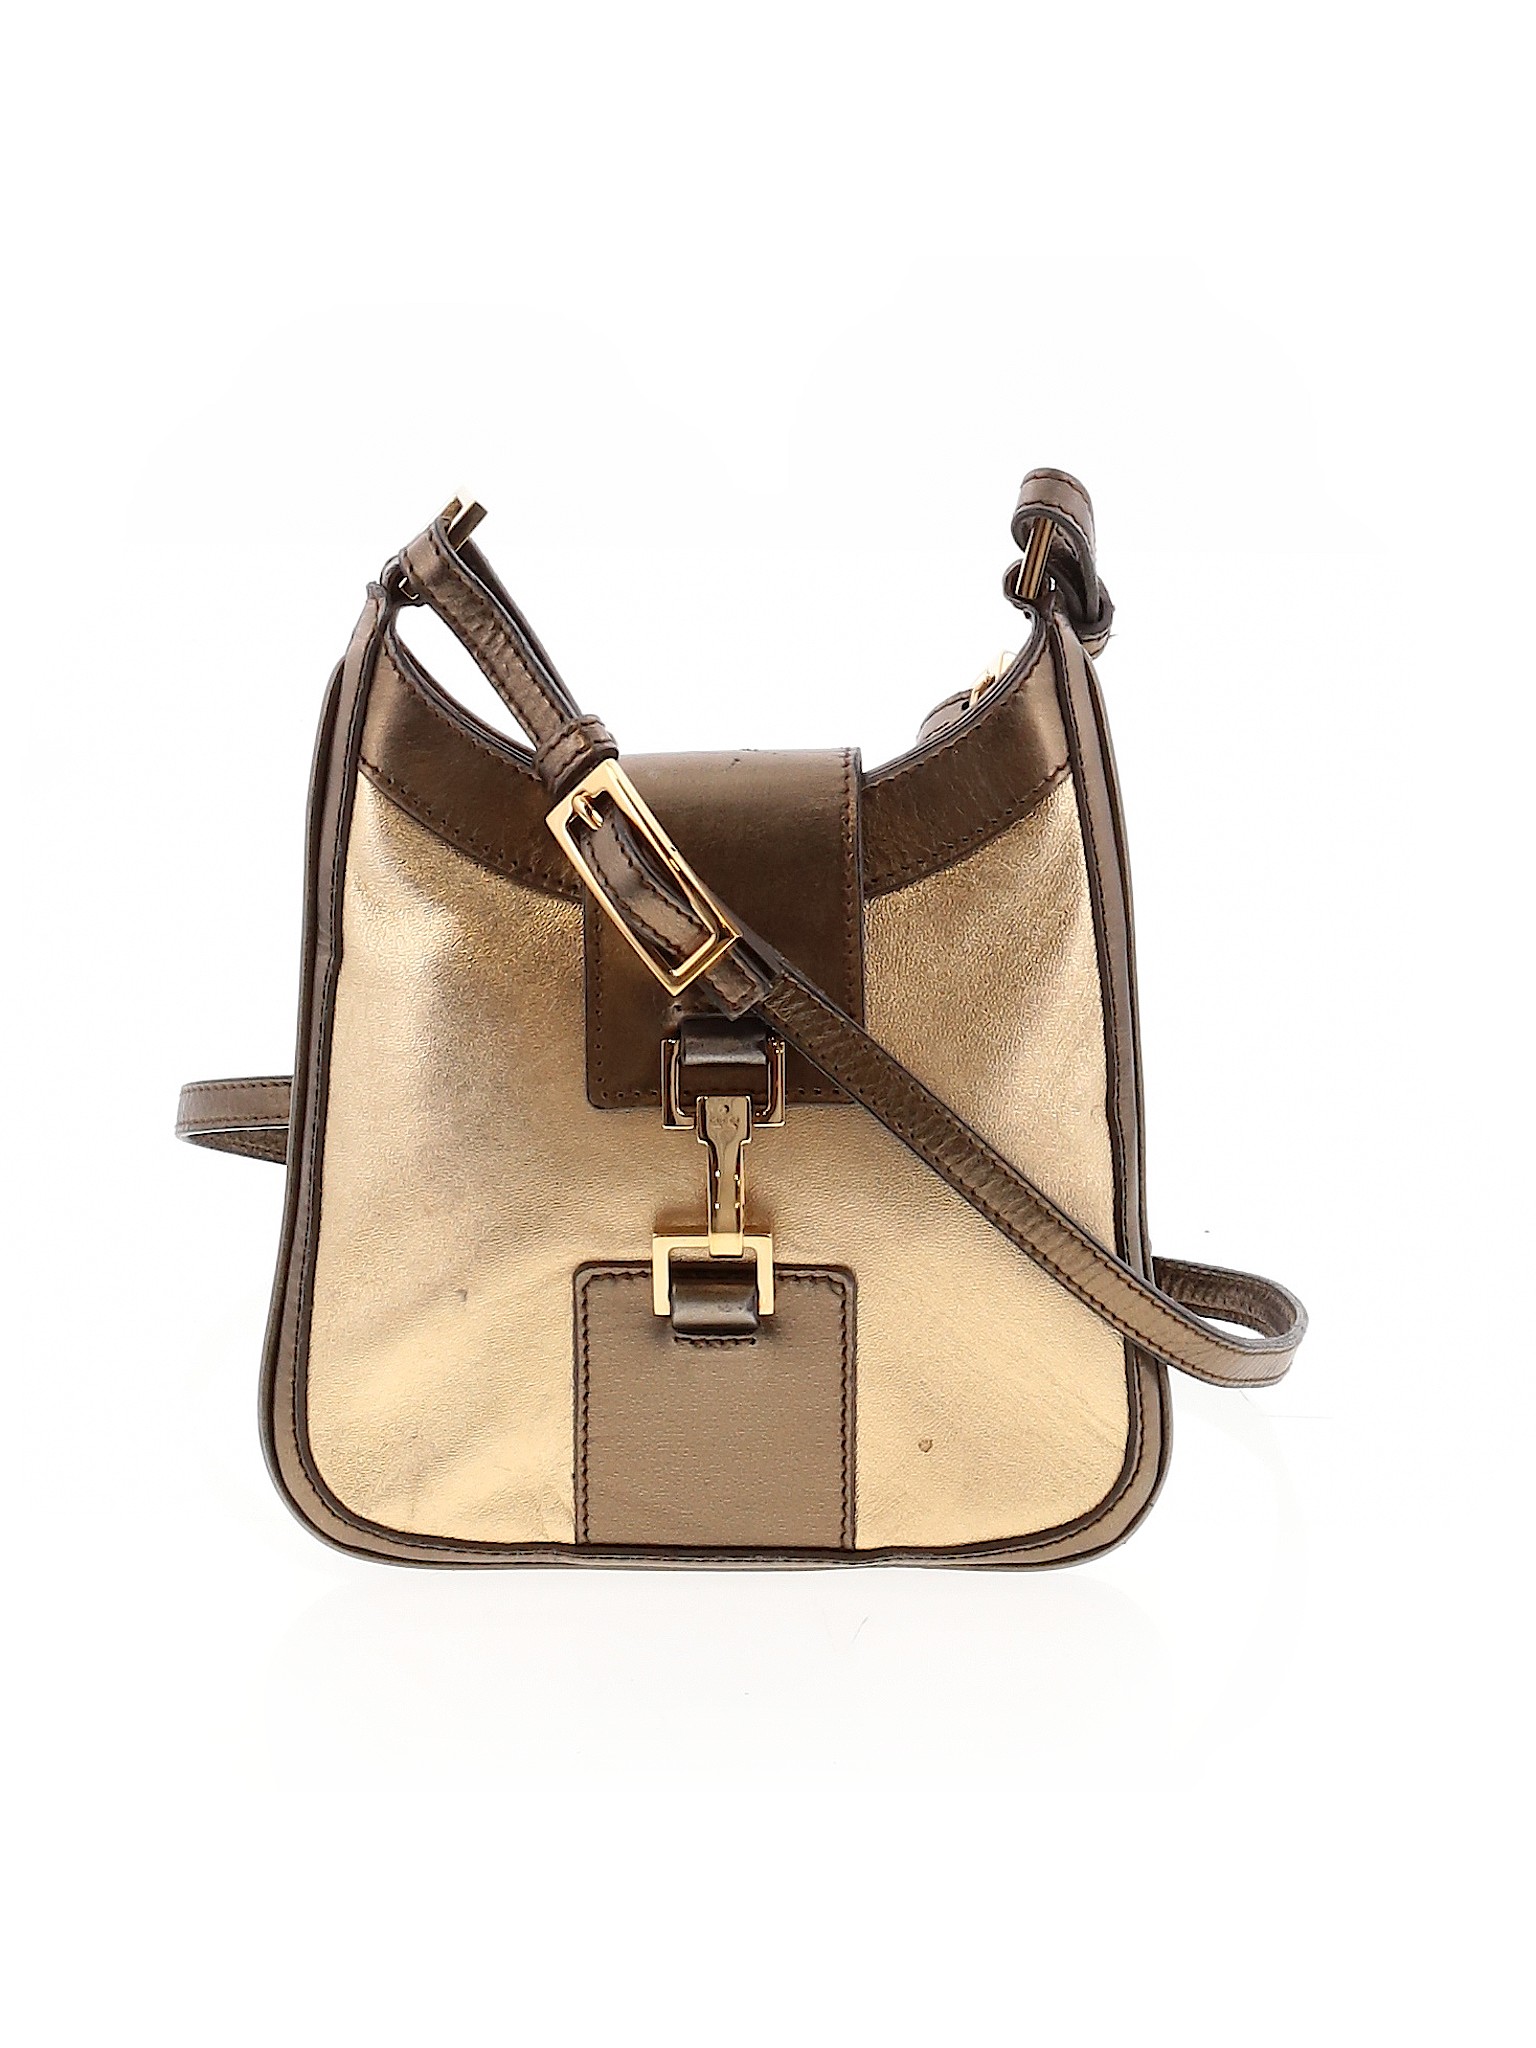 Gucci Outlet Women Brown Leather Shoulder Bag One Size | eBay